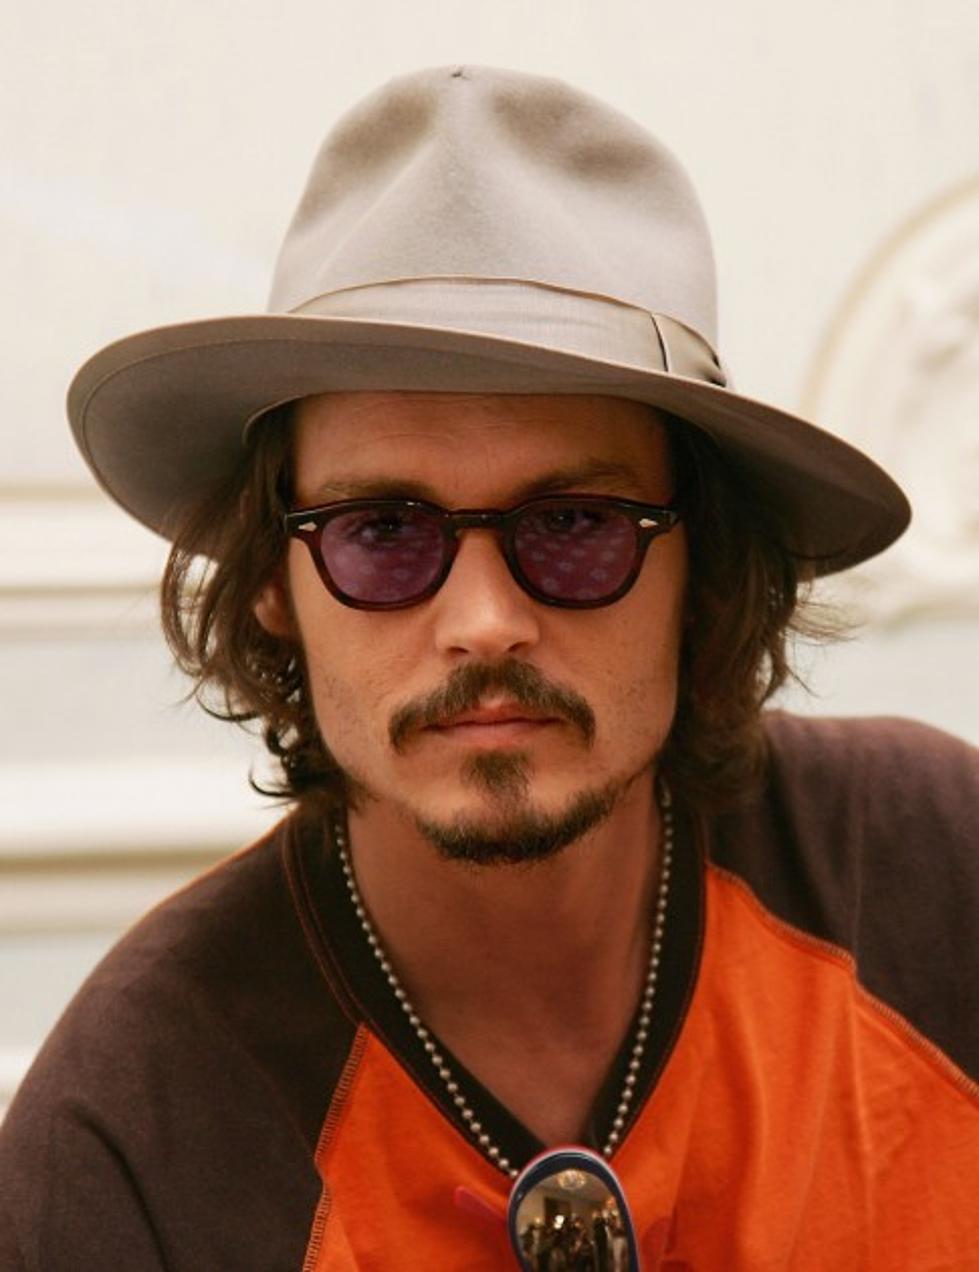 Johnny Depp Got Robbed [WATCH]